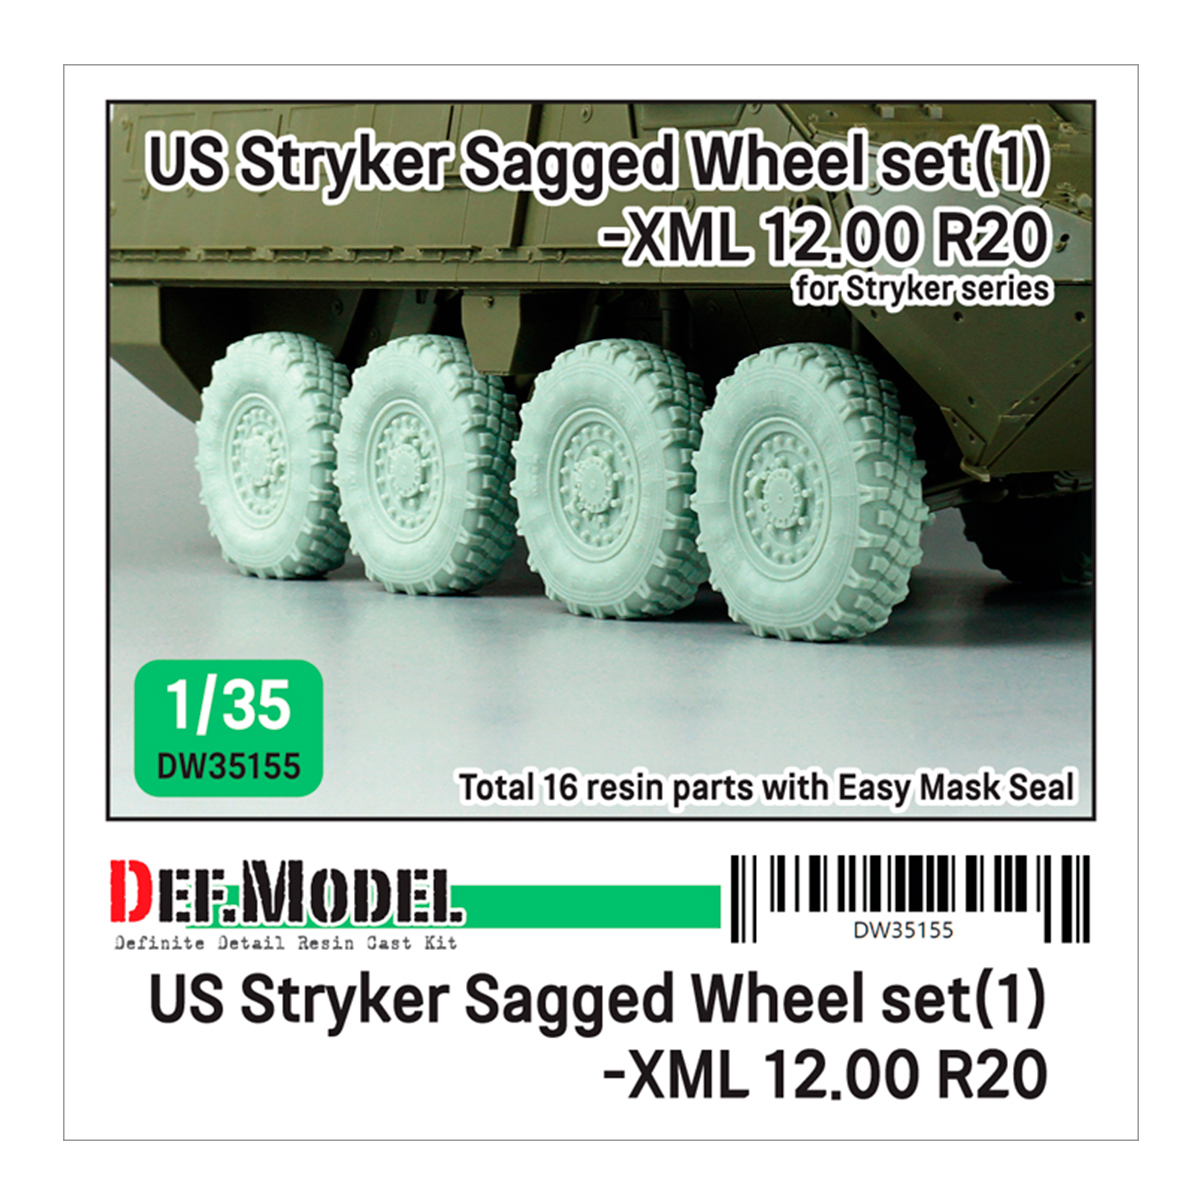 US M1126 Stryker XML Sagged wheel set (1) (for Stryker series 1/35)-Retool DW35010A